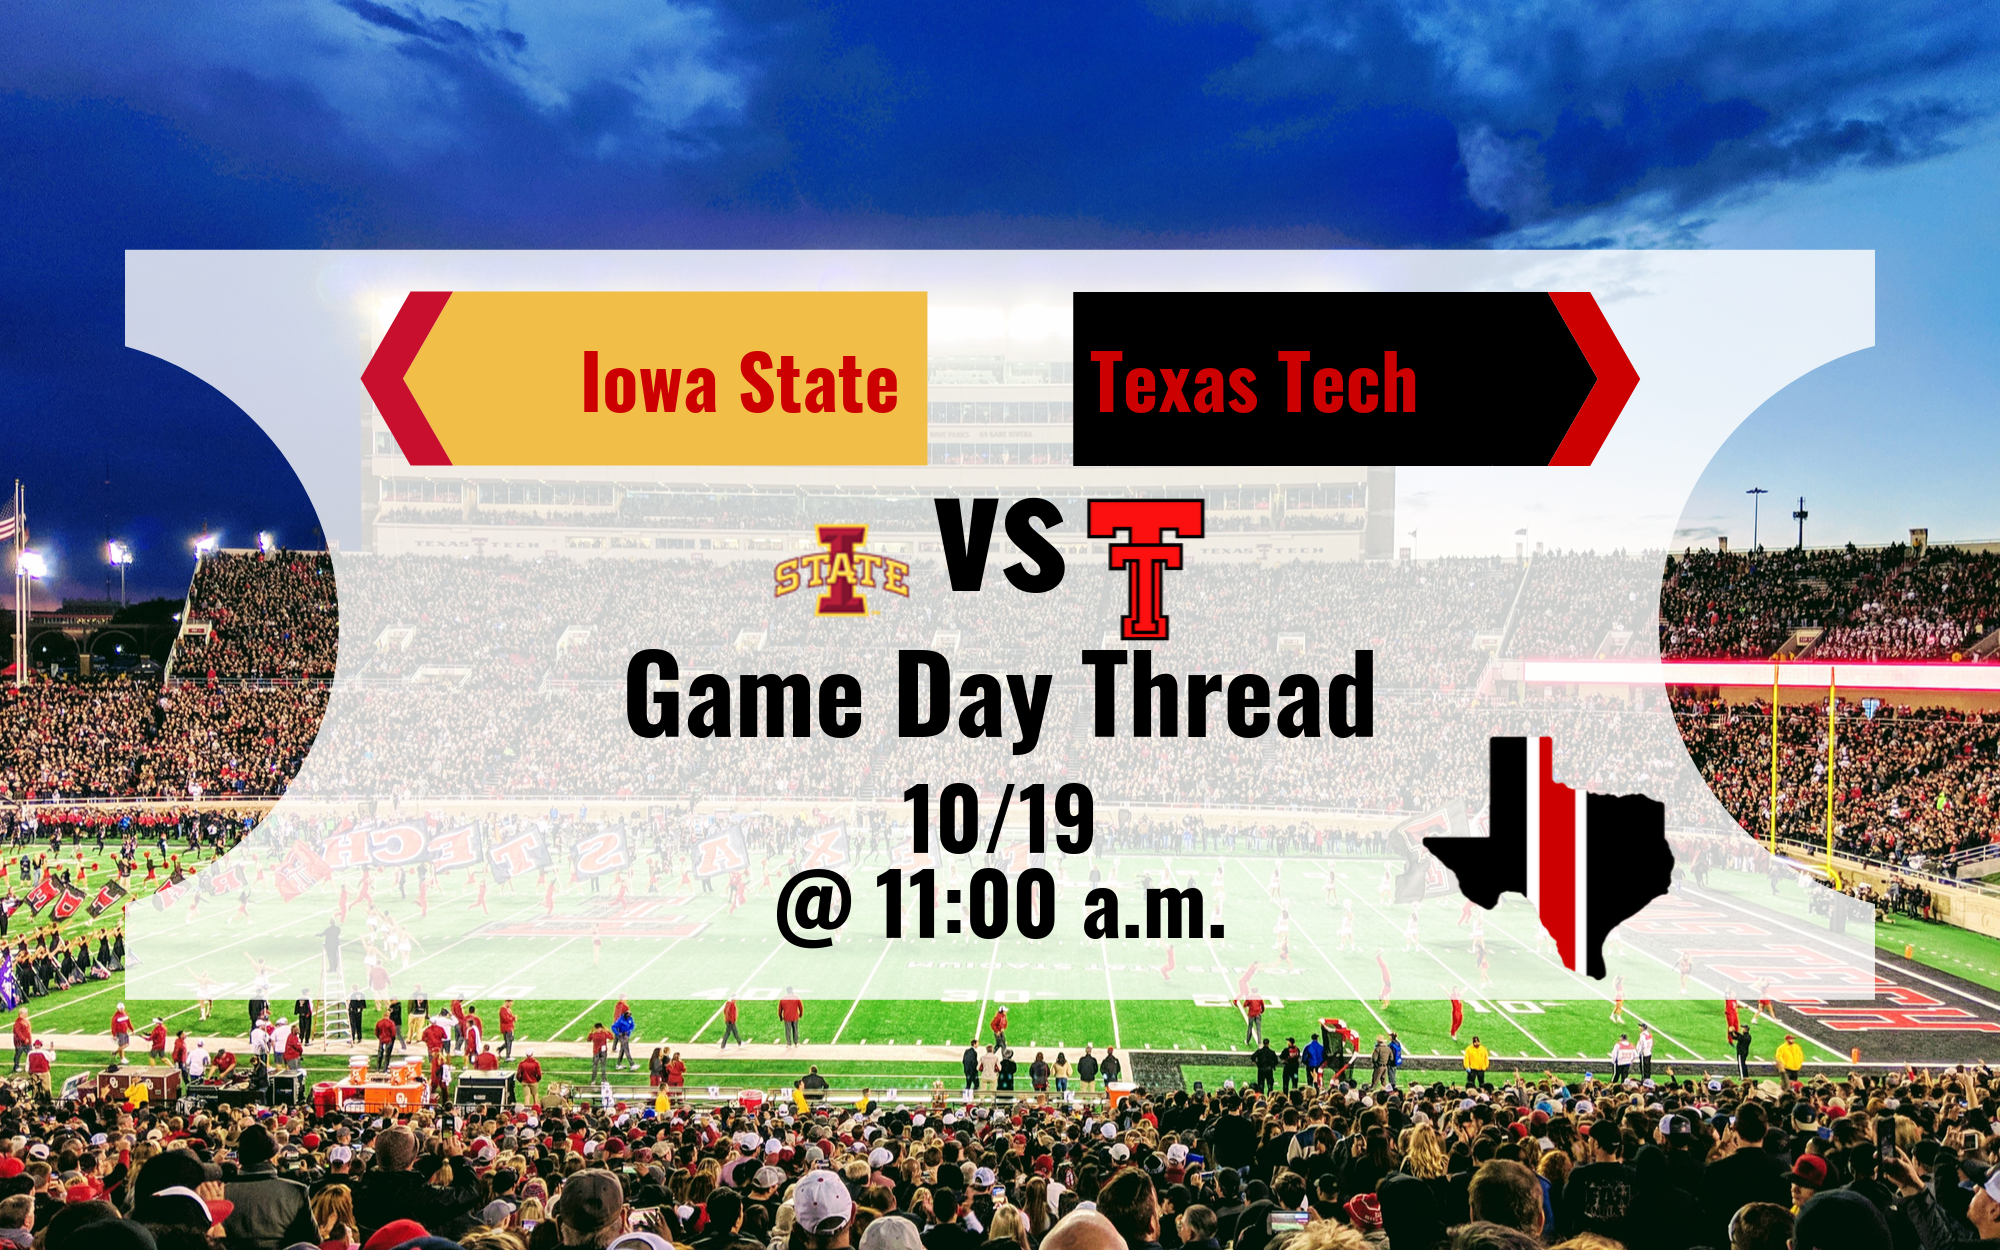 Game Day Thread 4: Iowa State vs. Texas Tech